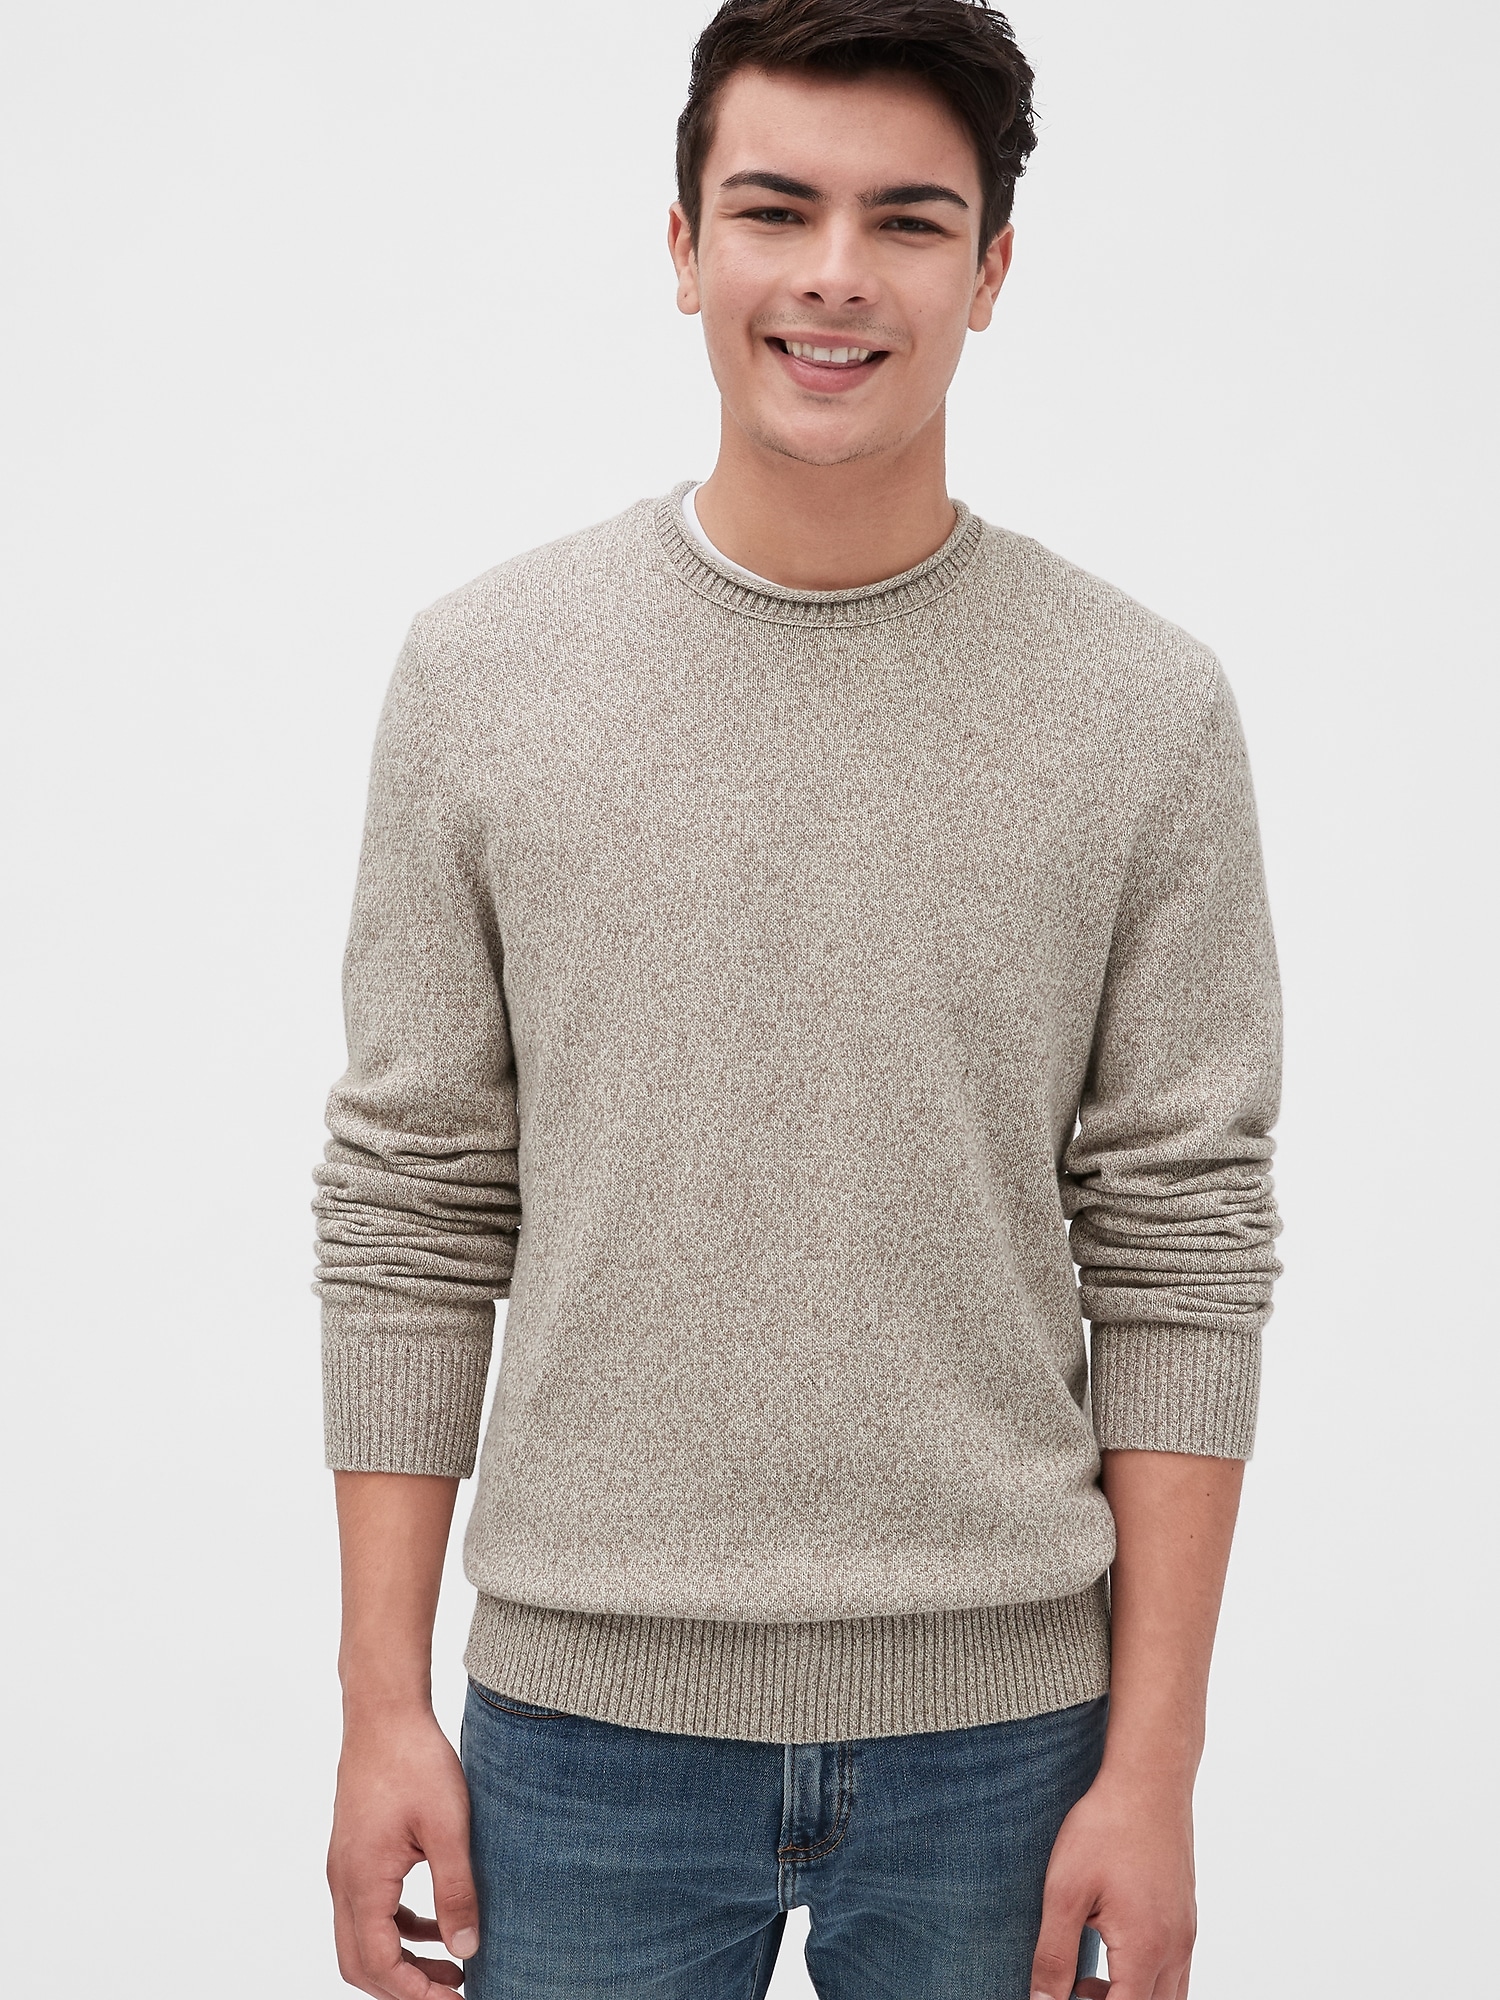 Cozy Classic Roll-Neck Sweater | Gap